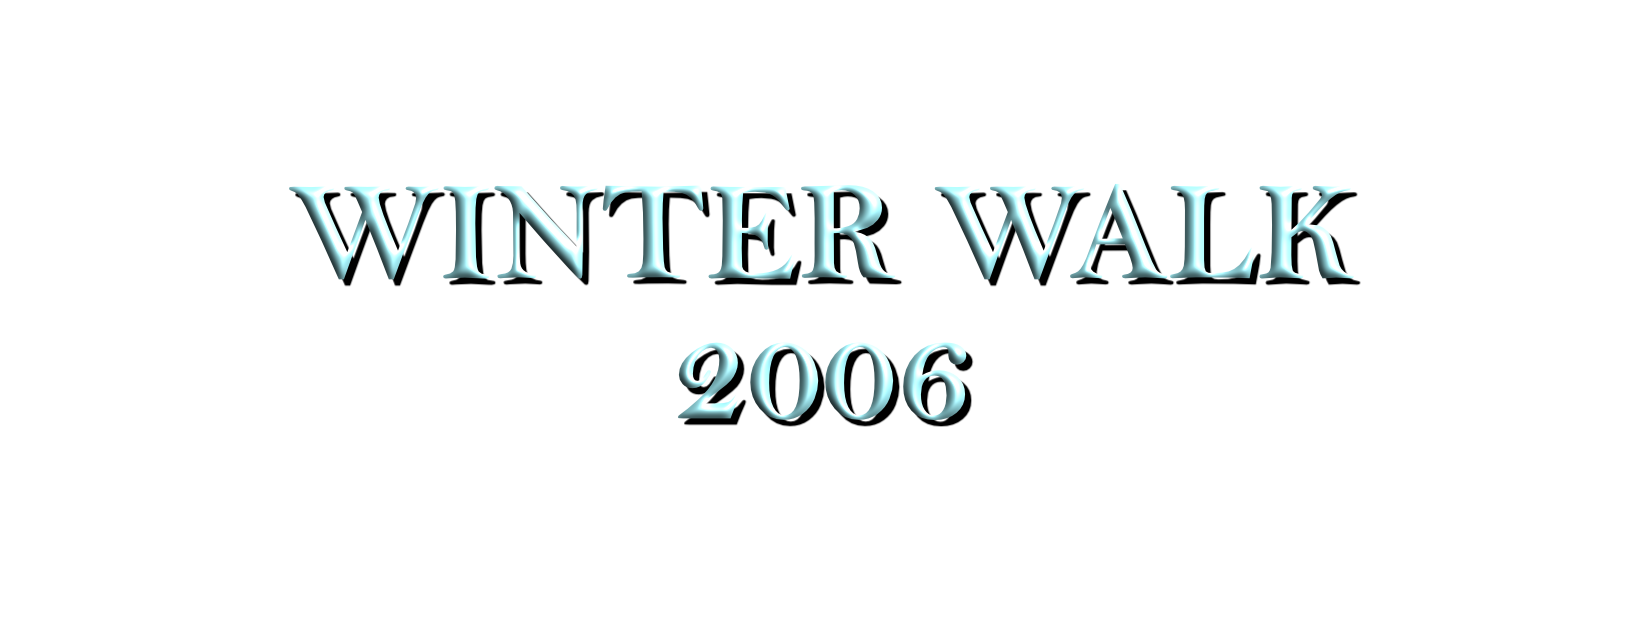 Winter Walk 2006